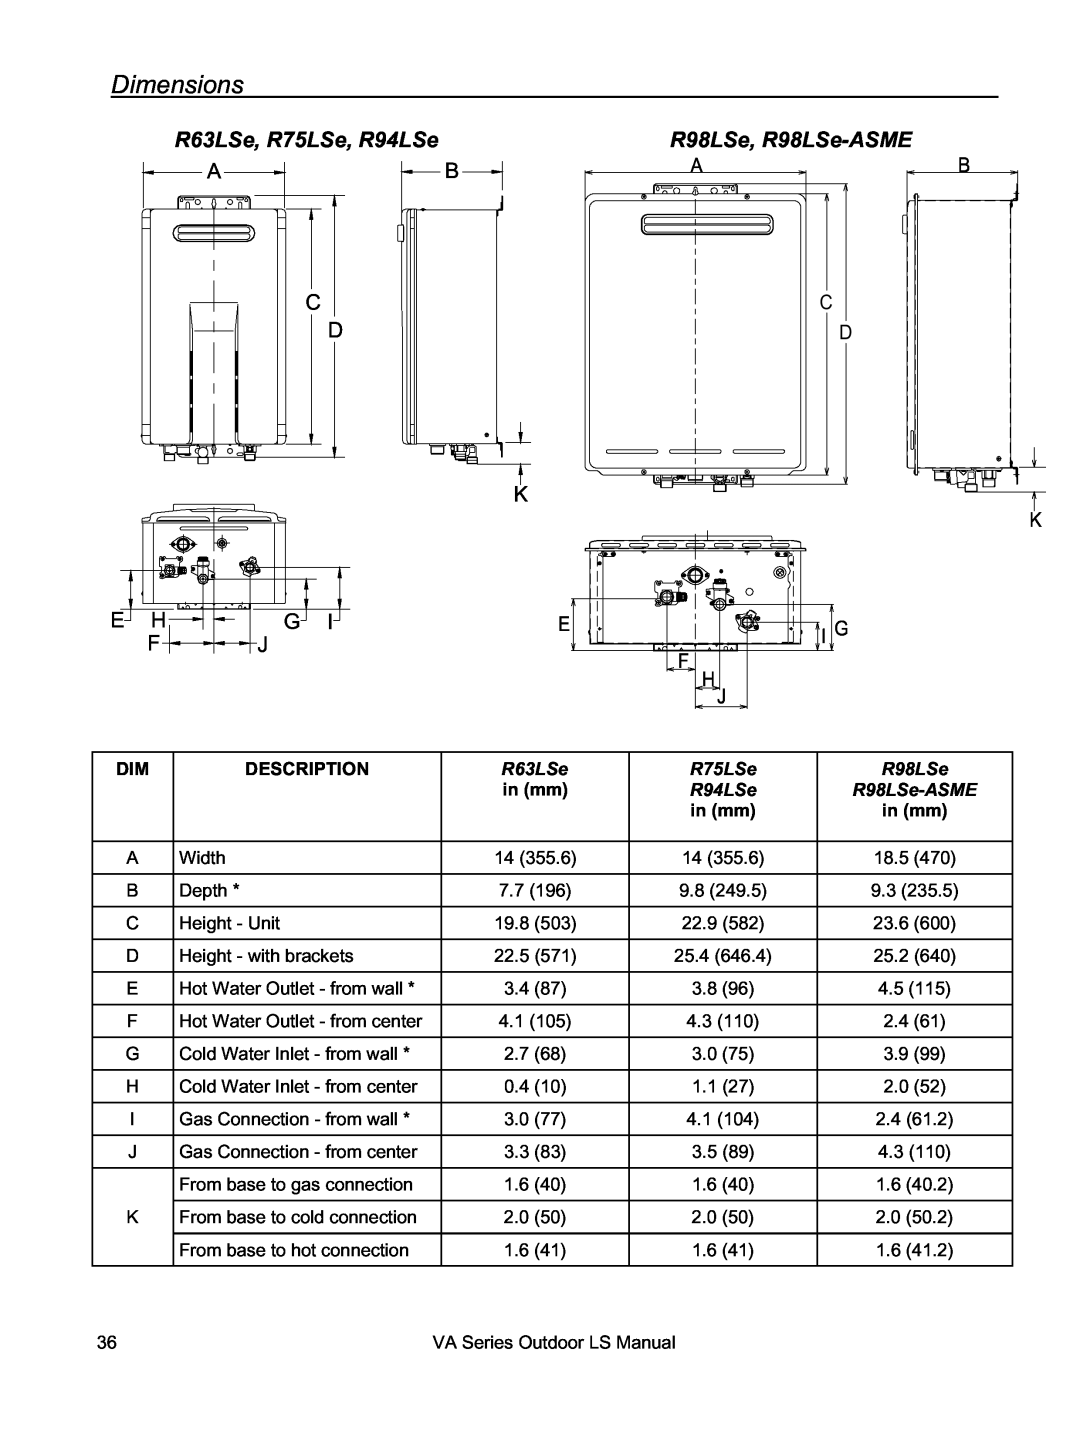 Rinnai installation manual Dimensions, R63LSe, R75LSe, R94LSe, R98LSe, R98LSe-ASME, Ab C D K, F H J, Description, in mm 